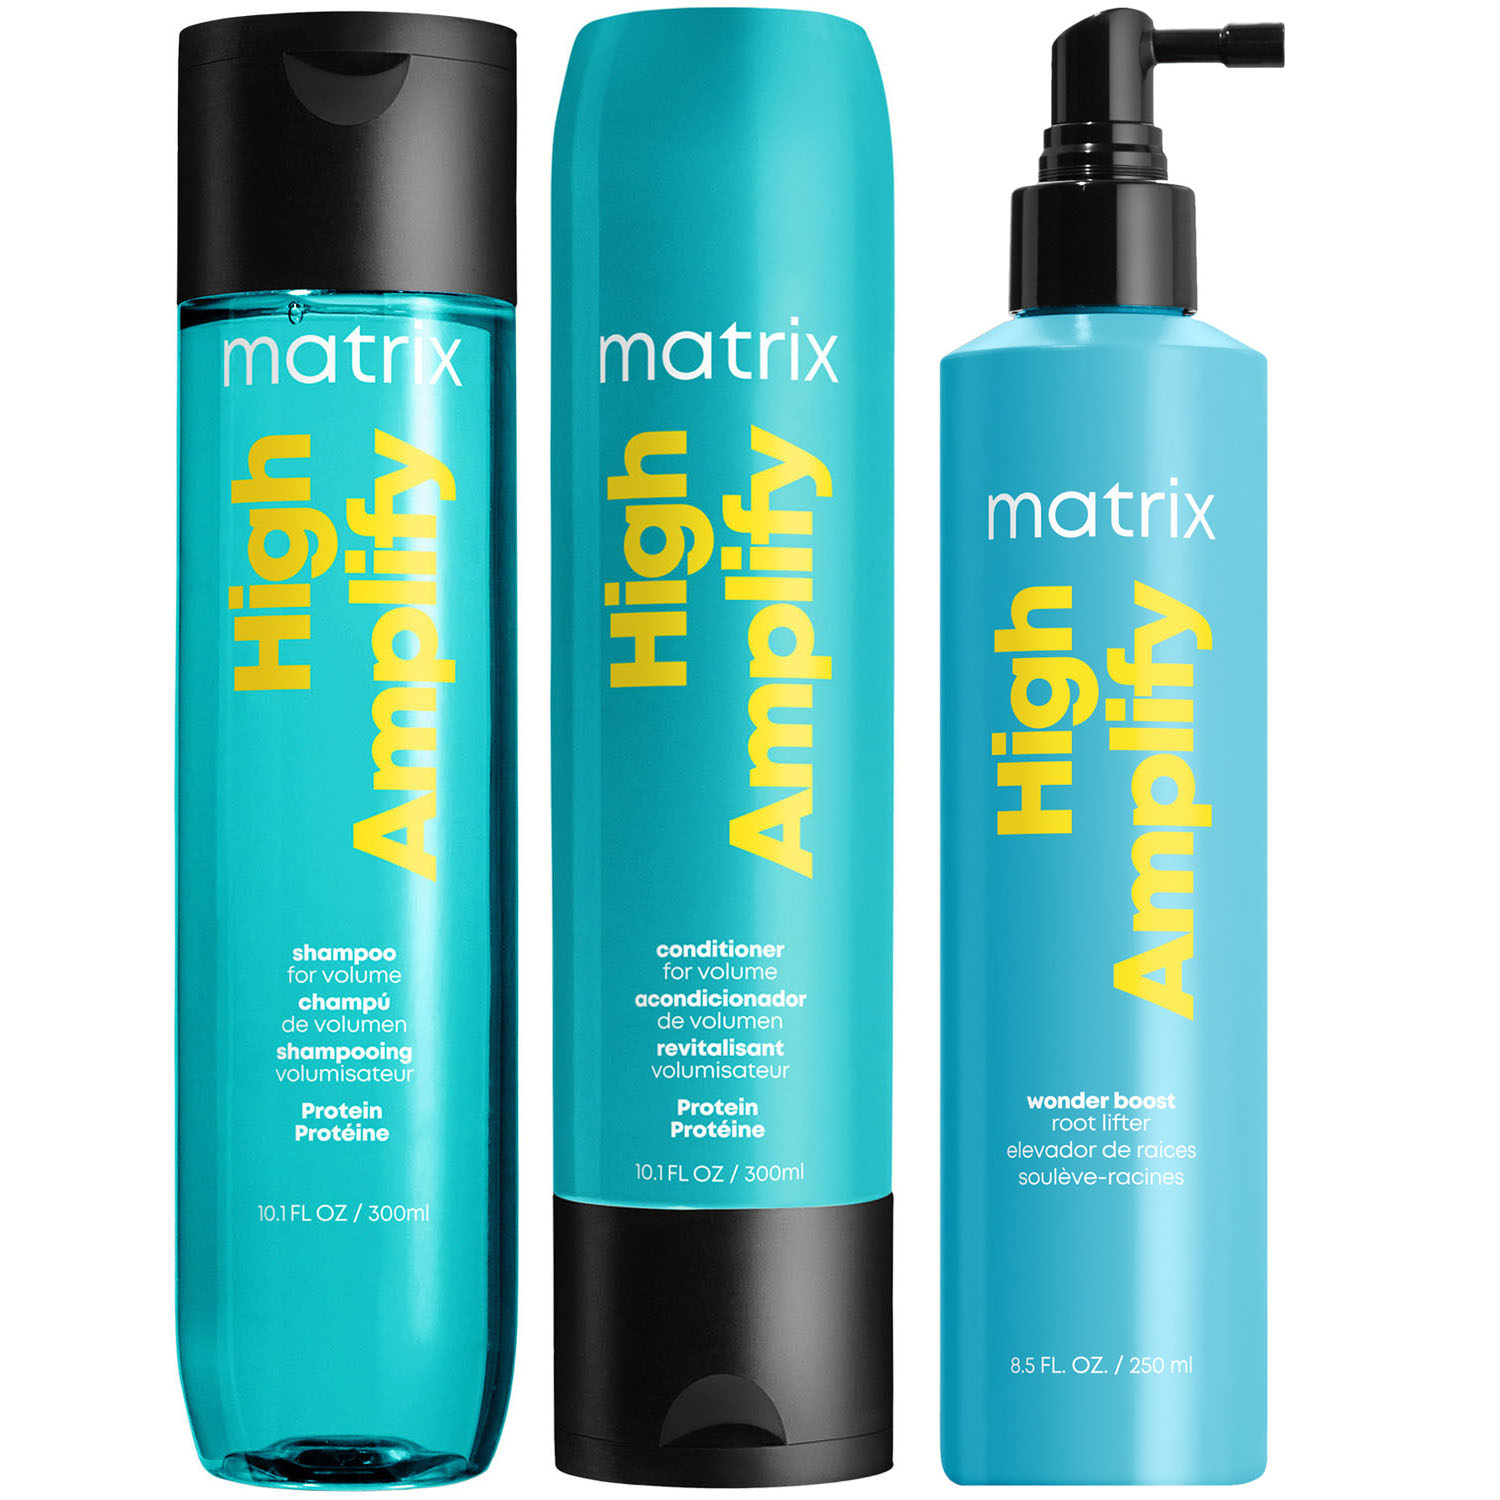 Matrix Набор для объема волос: шампунь 300 мл + кондиционер 300 мл + спрей 250 мл (Matrix, Total results) спрей matrix high amplify wonder boost для прикорневого объема 250 мл